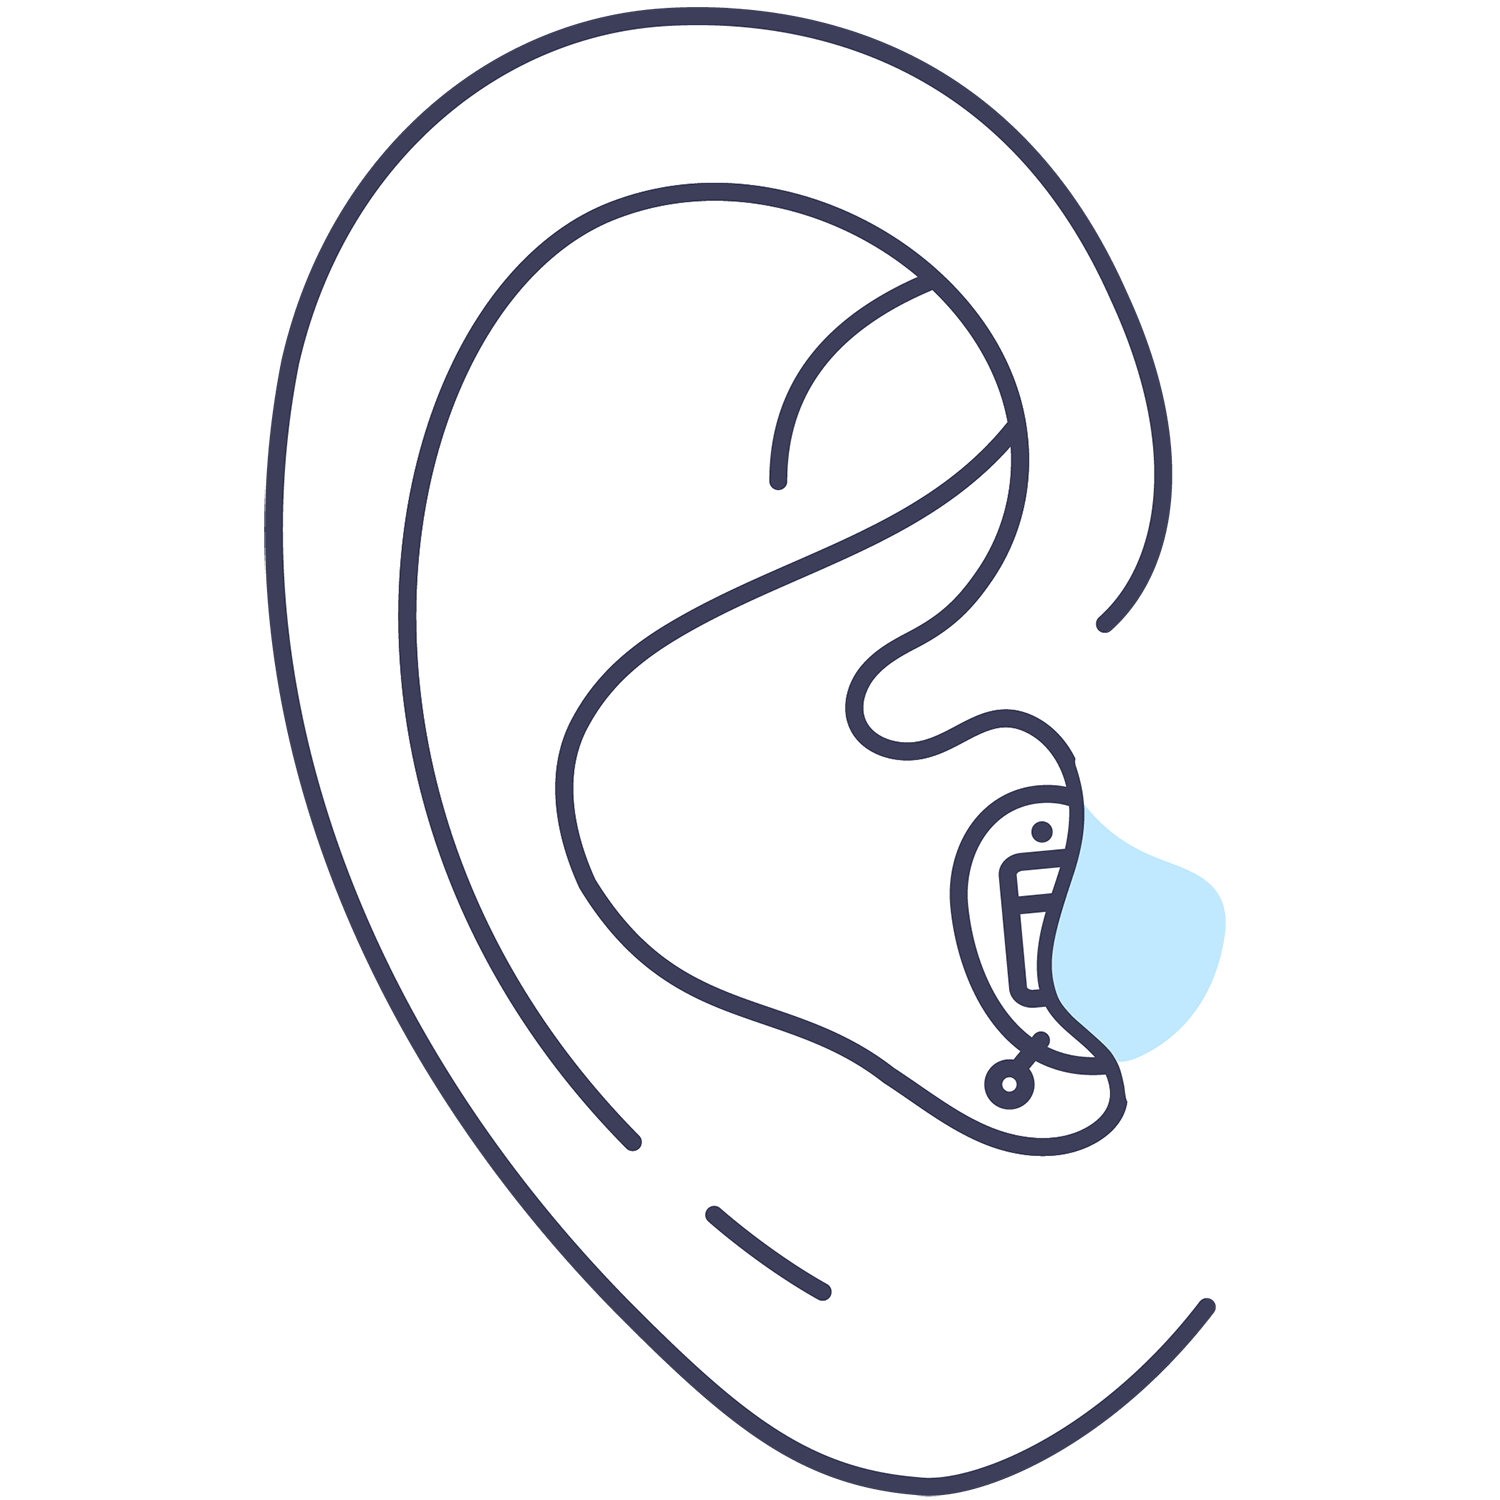 hearing aid in ear